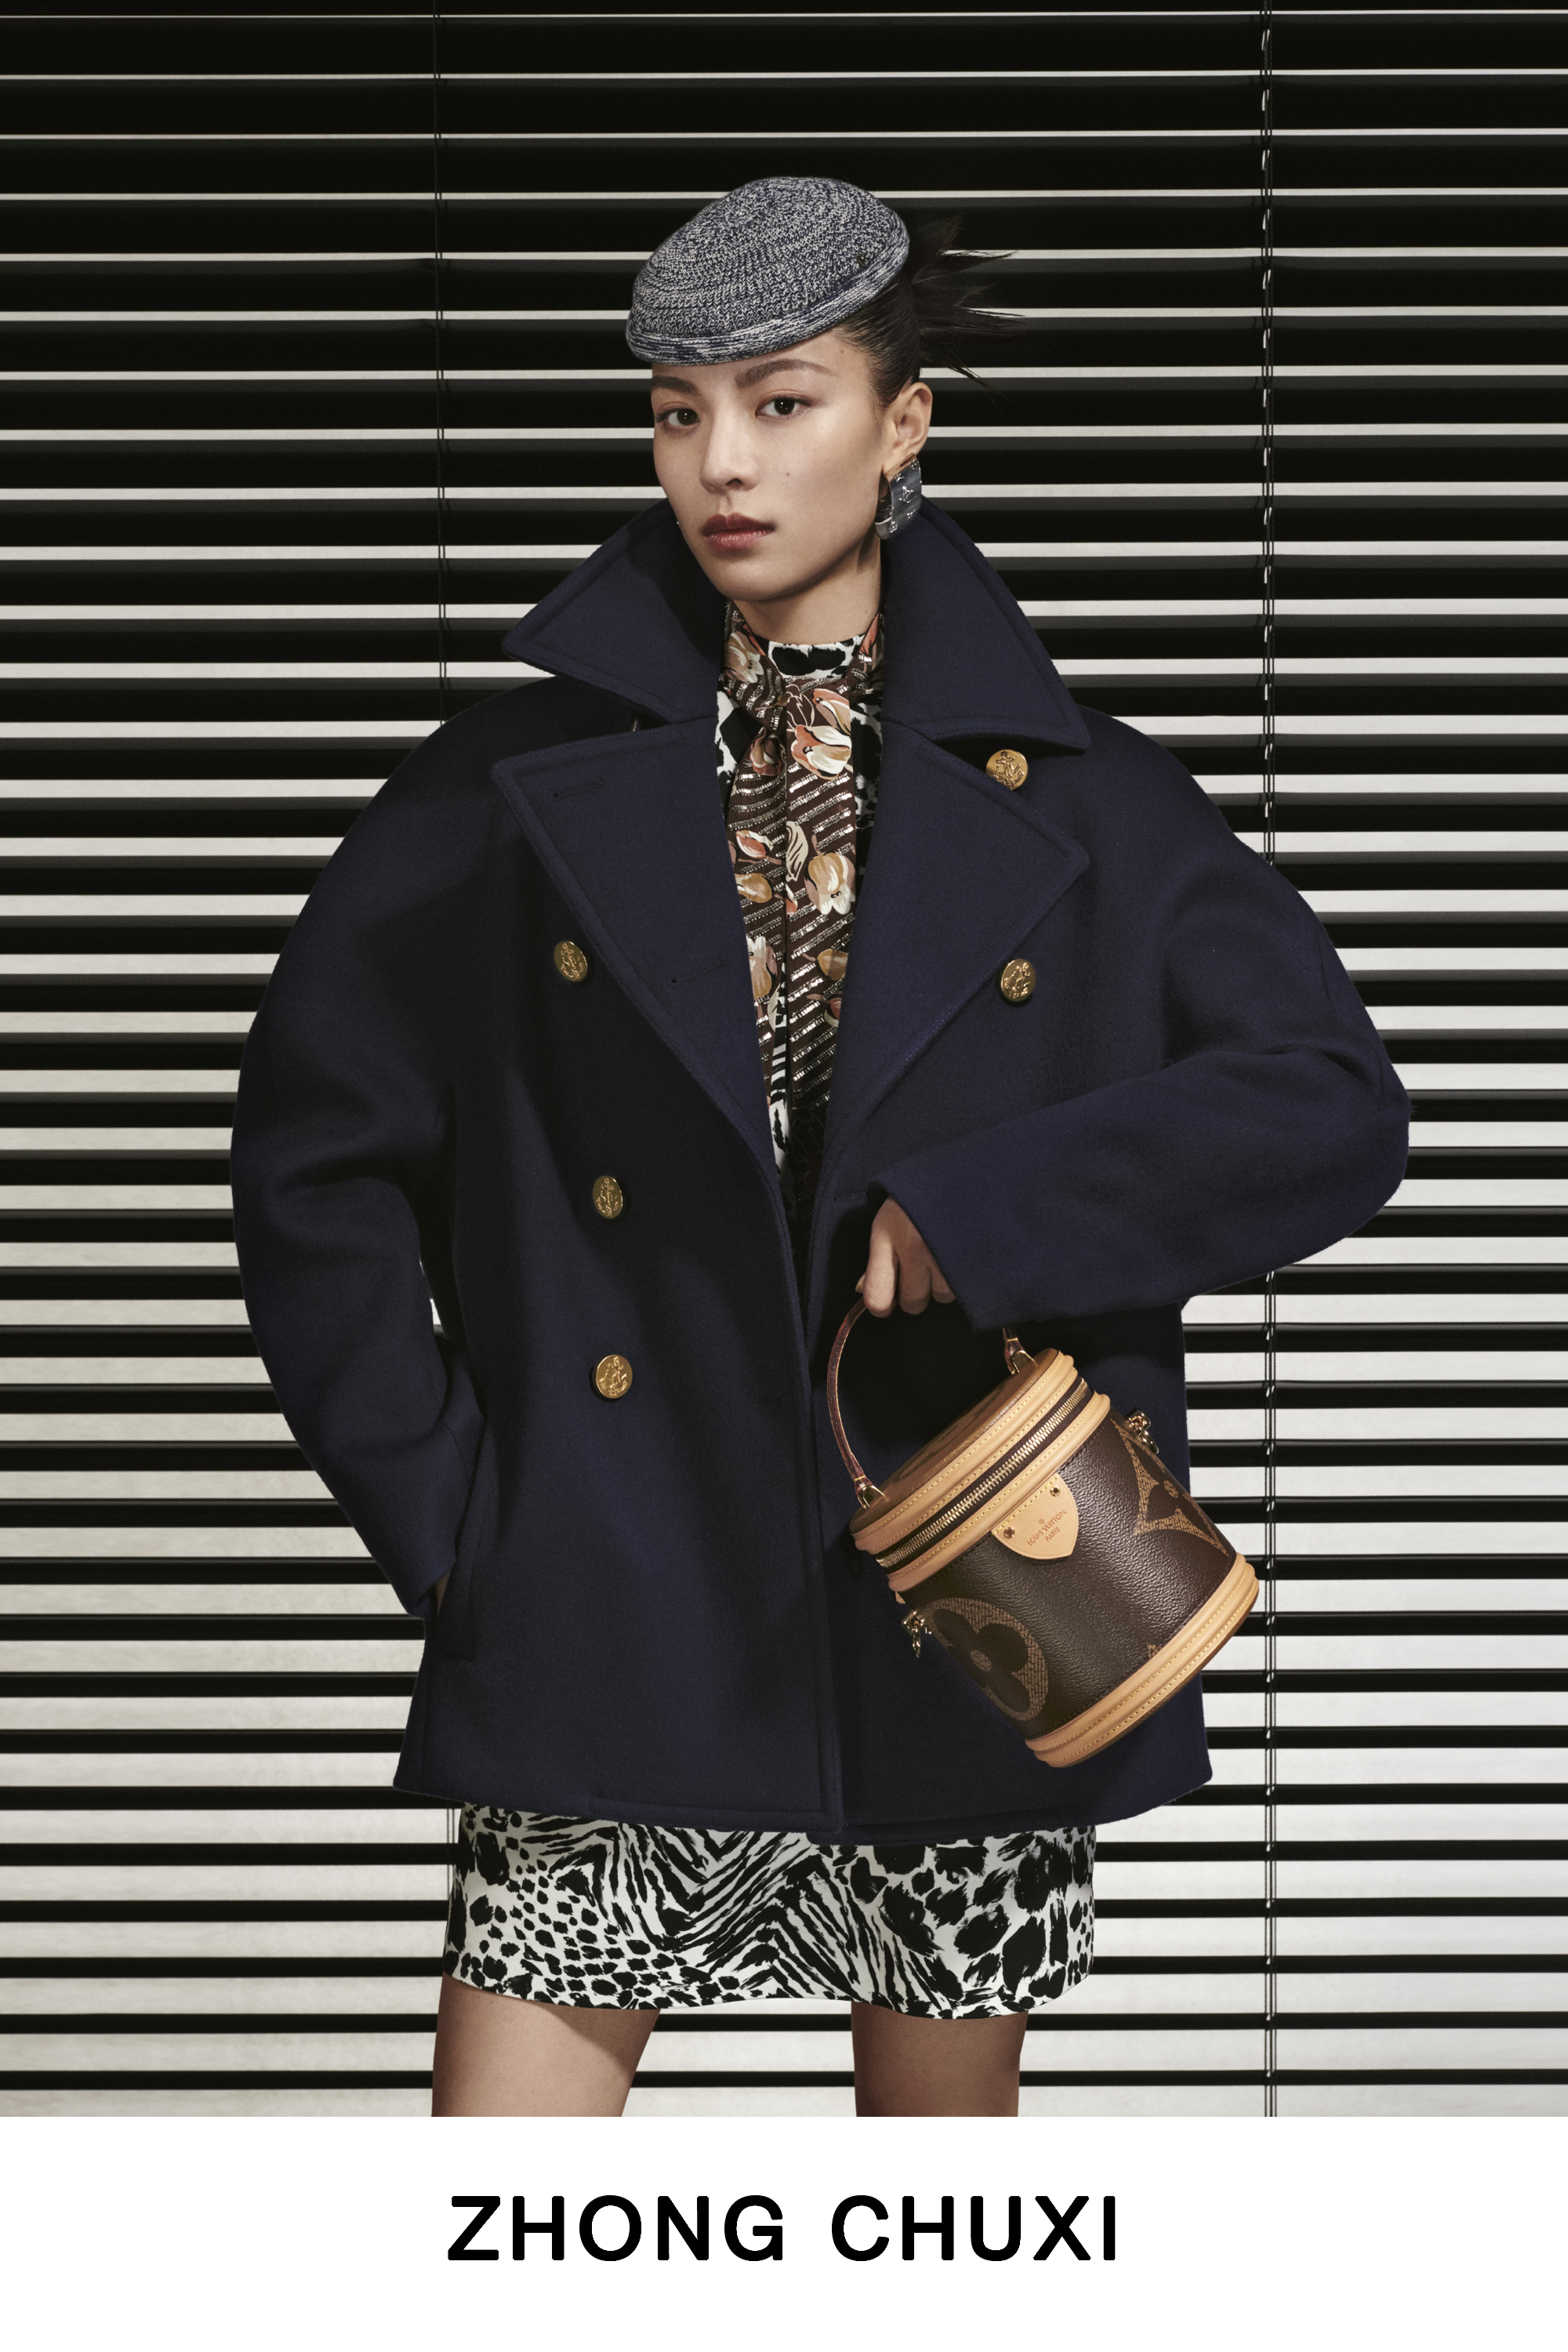 Louis Vuitton Twist Handbags Ft. Chuxi Zhong Campaign